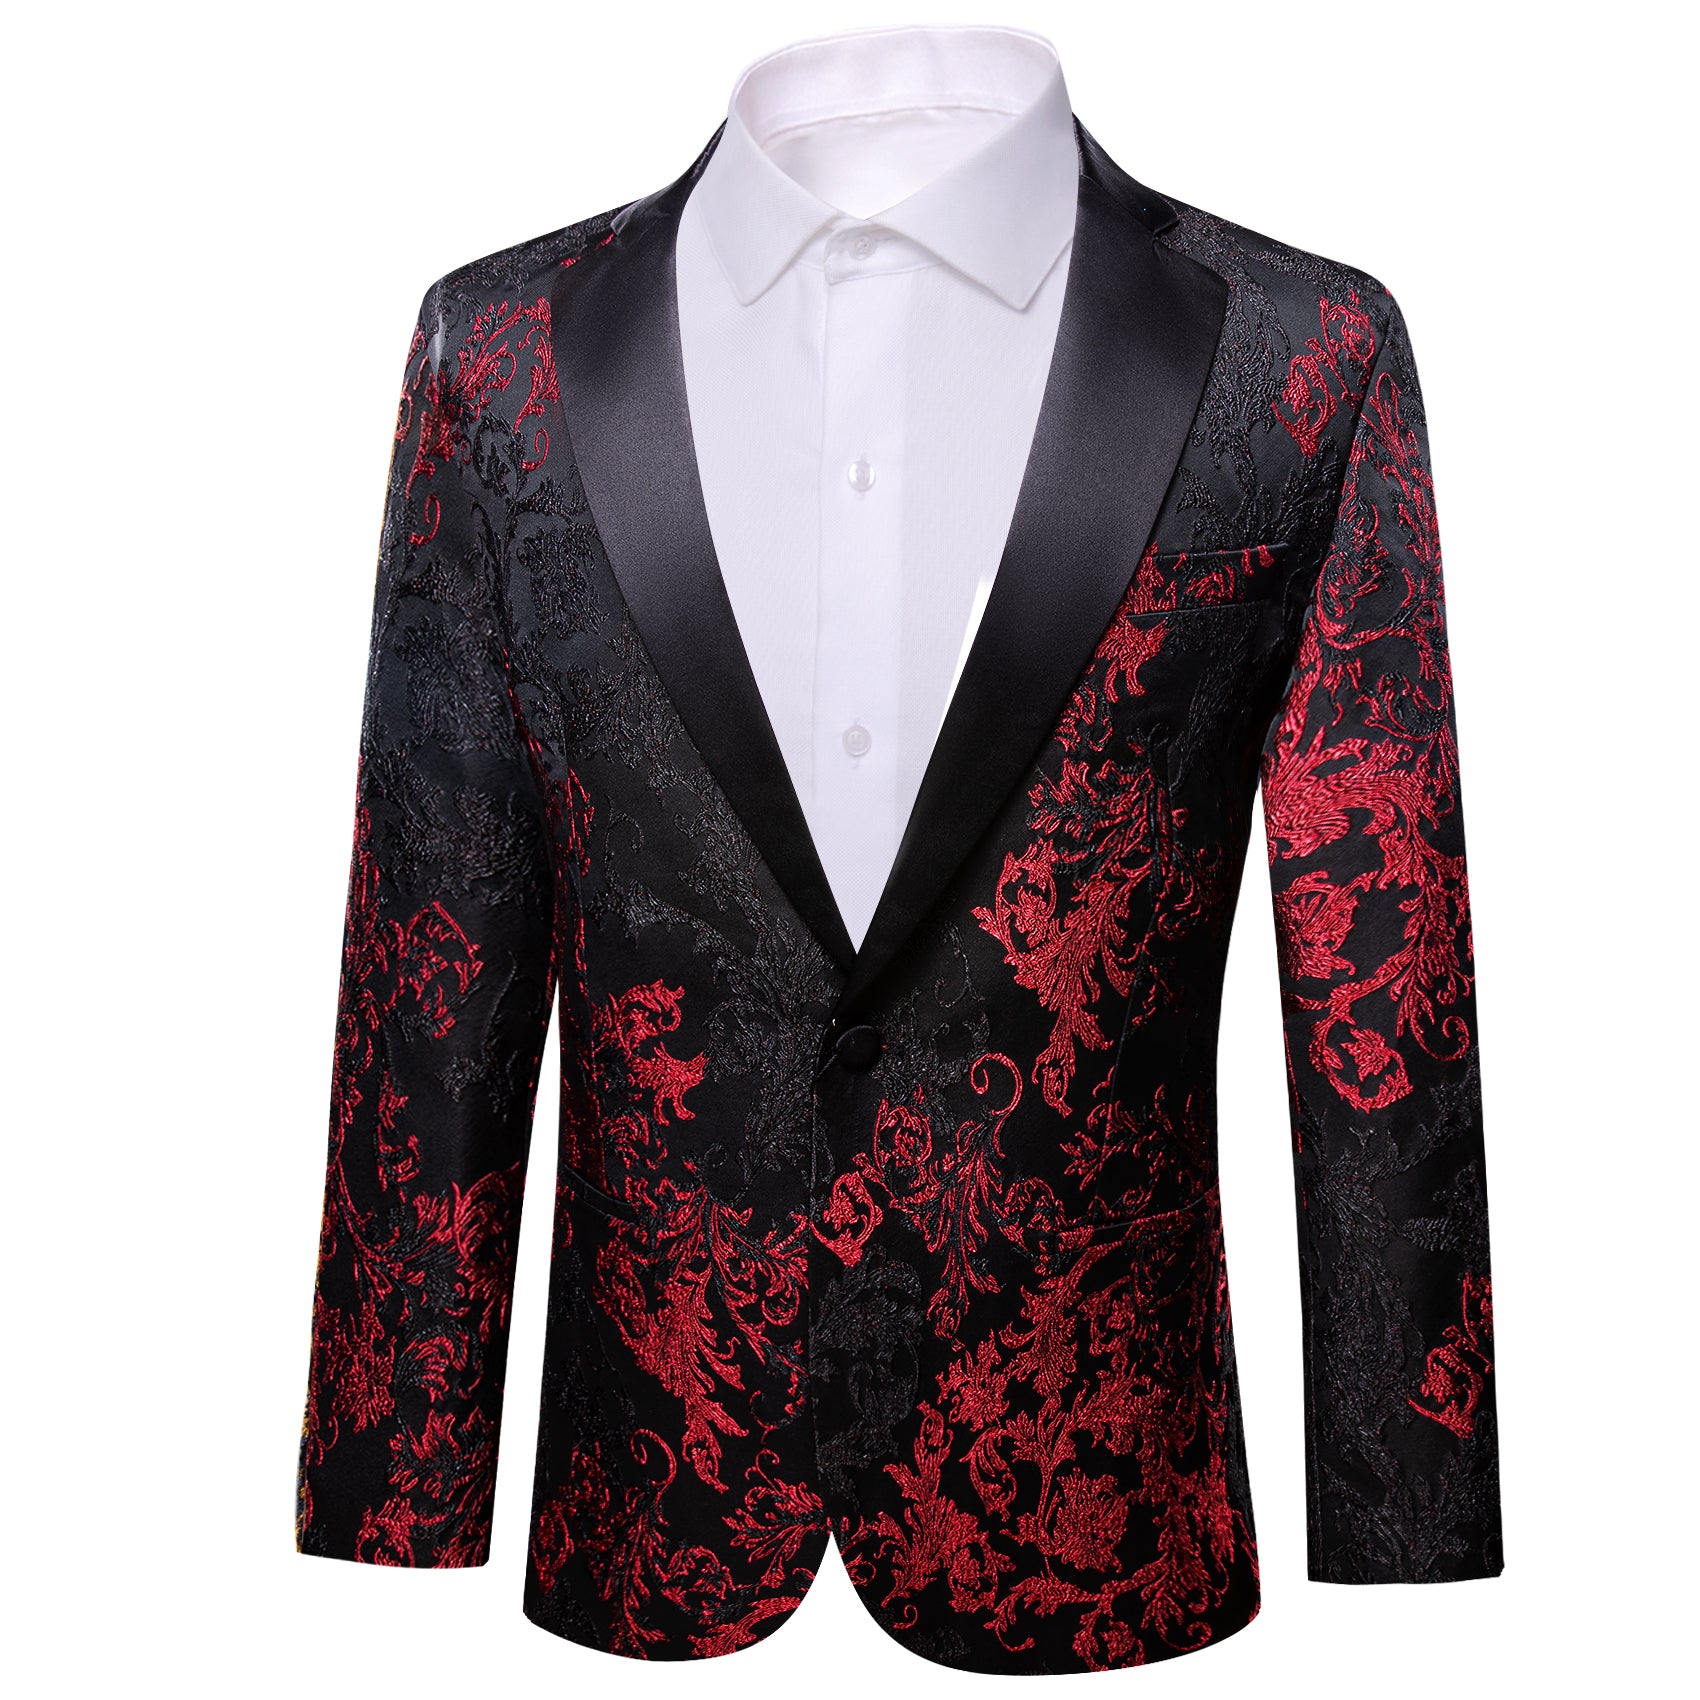 Men's Dress Party Black Red Paisley Suit Jacket Slim One Button Stylish Blazer